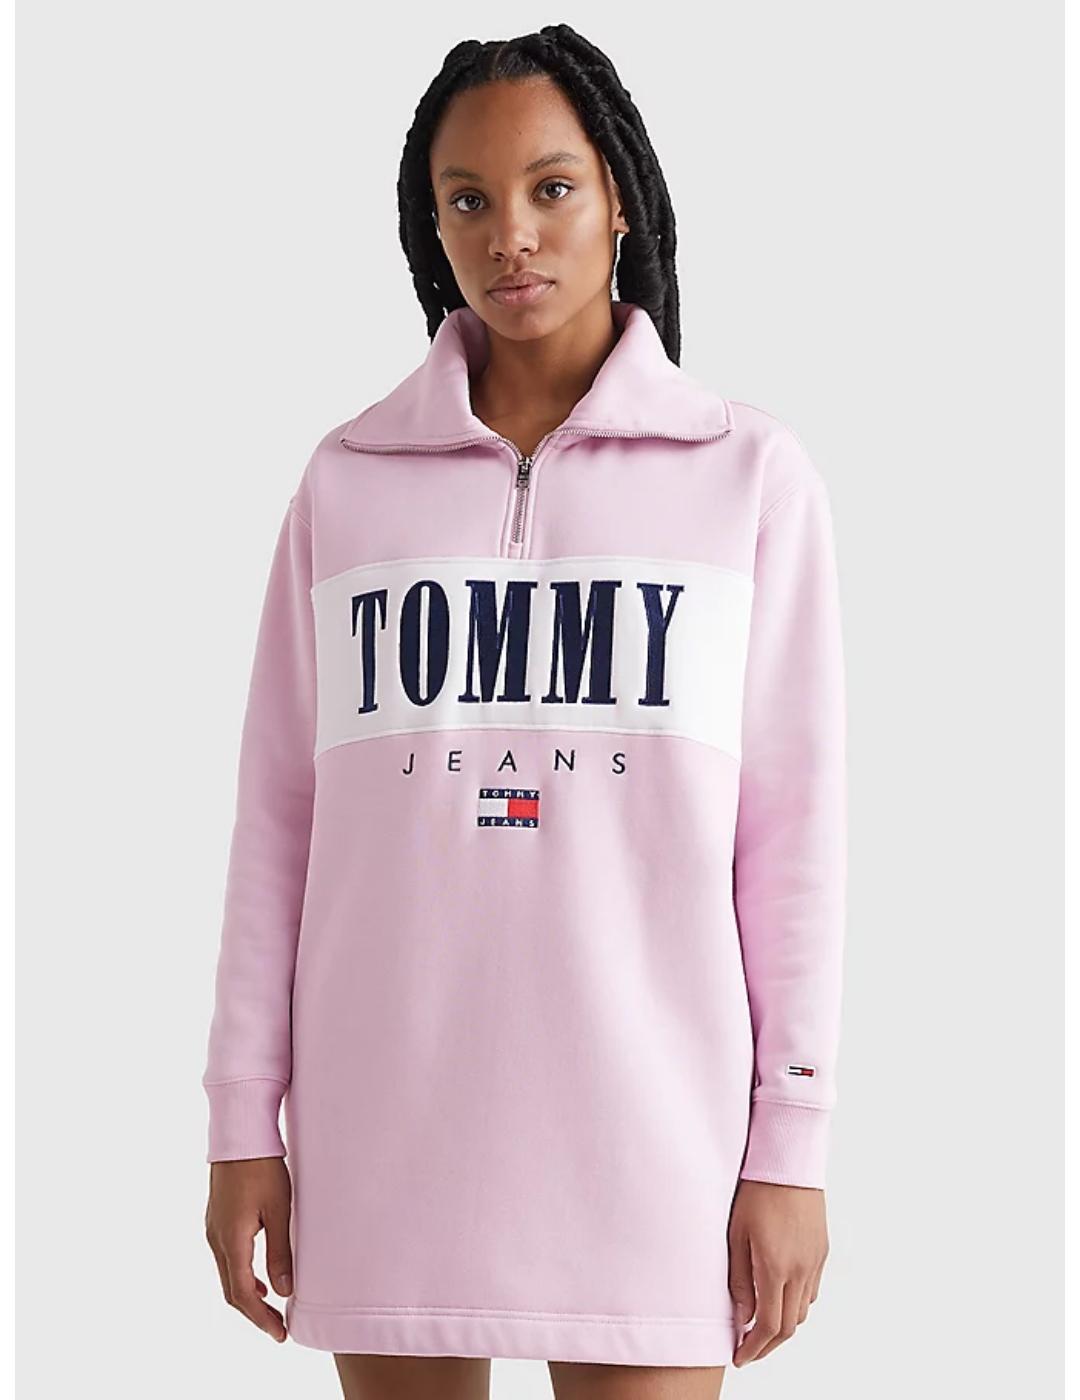 sudadera Tommy Jeans rosa mujer